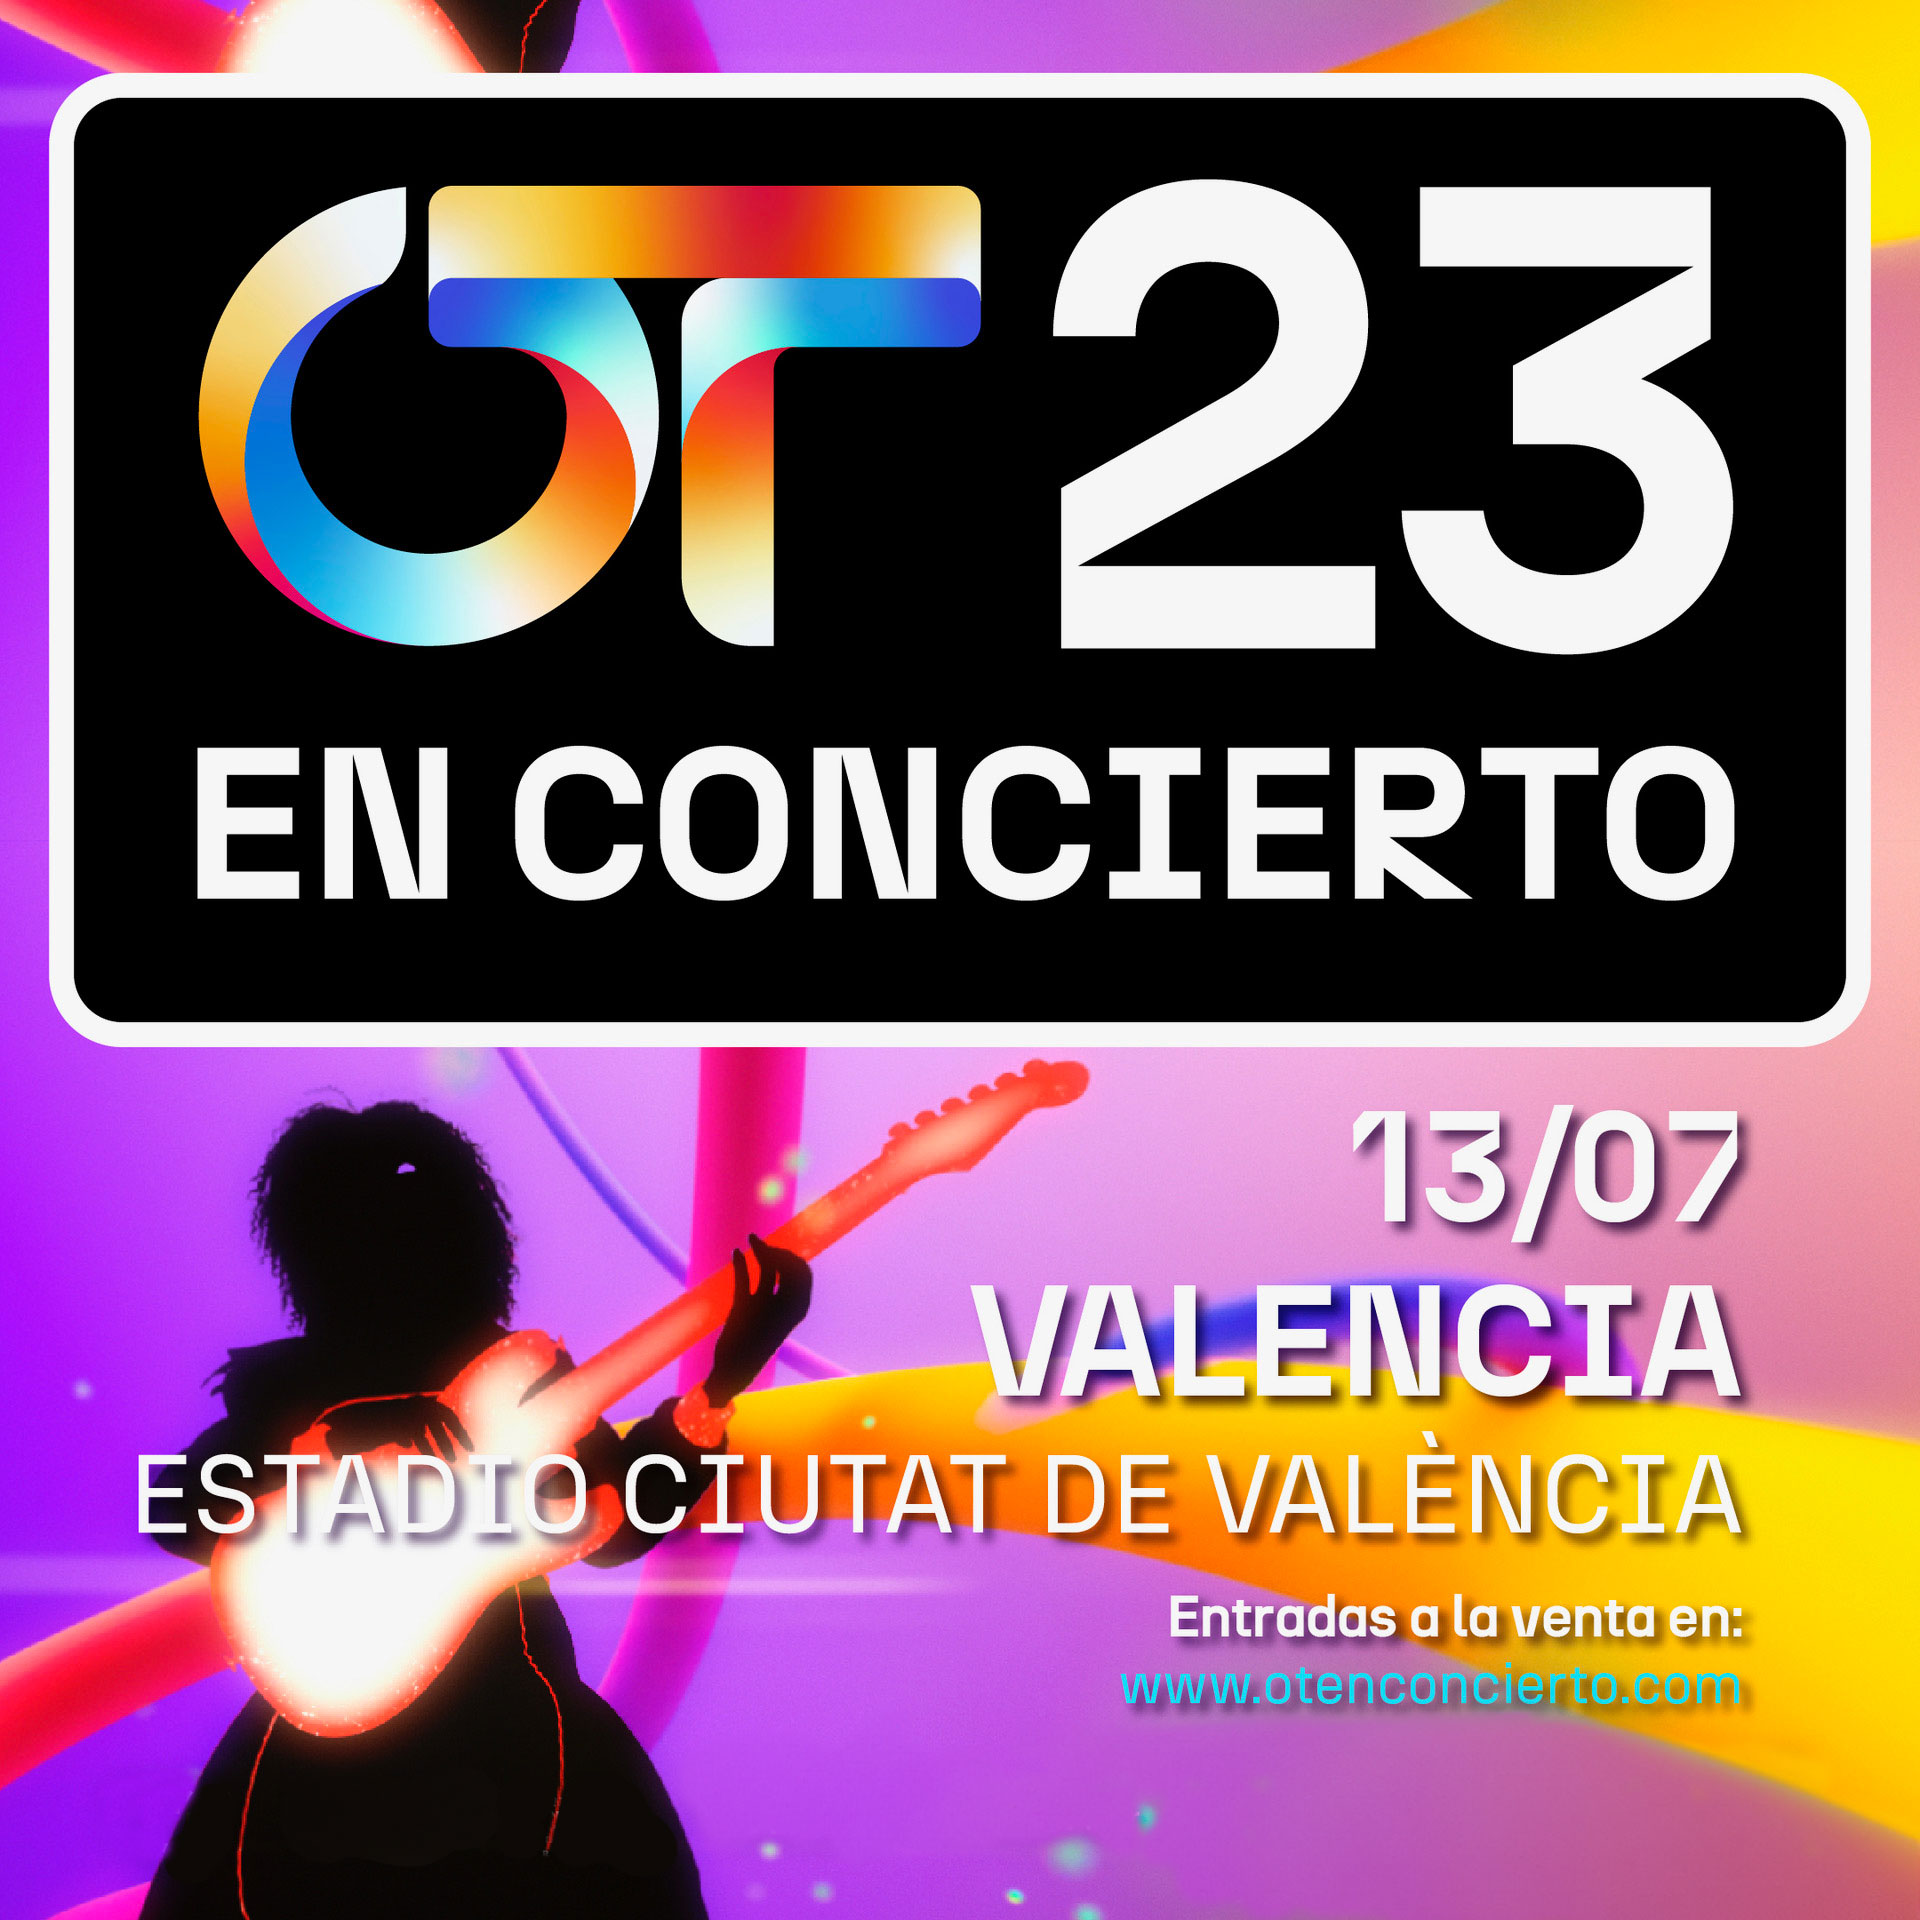 OT23 concierto Operacion Triunfo 13 de julio Estadi Ciutat de València